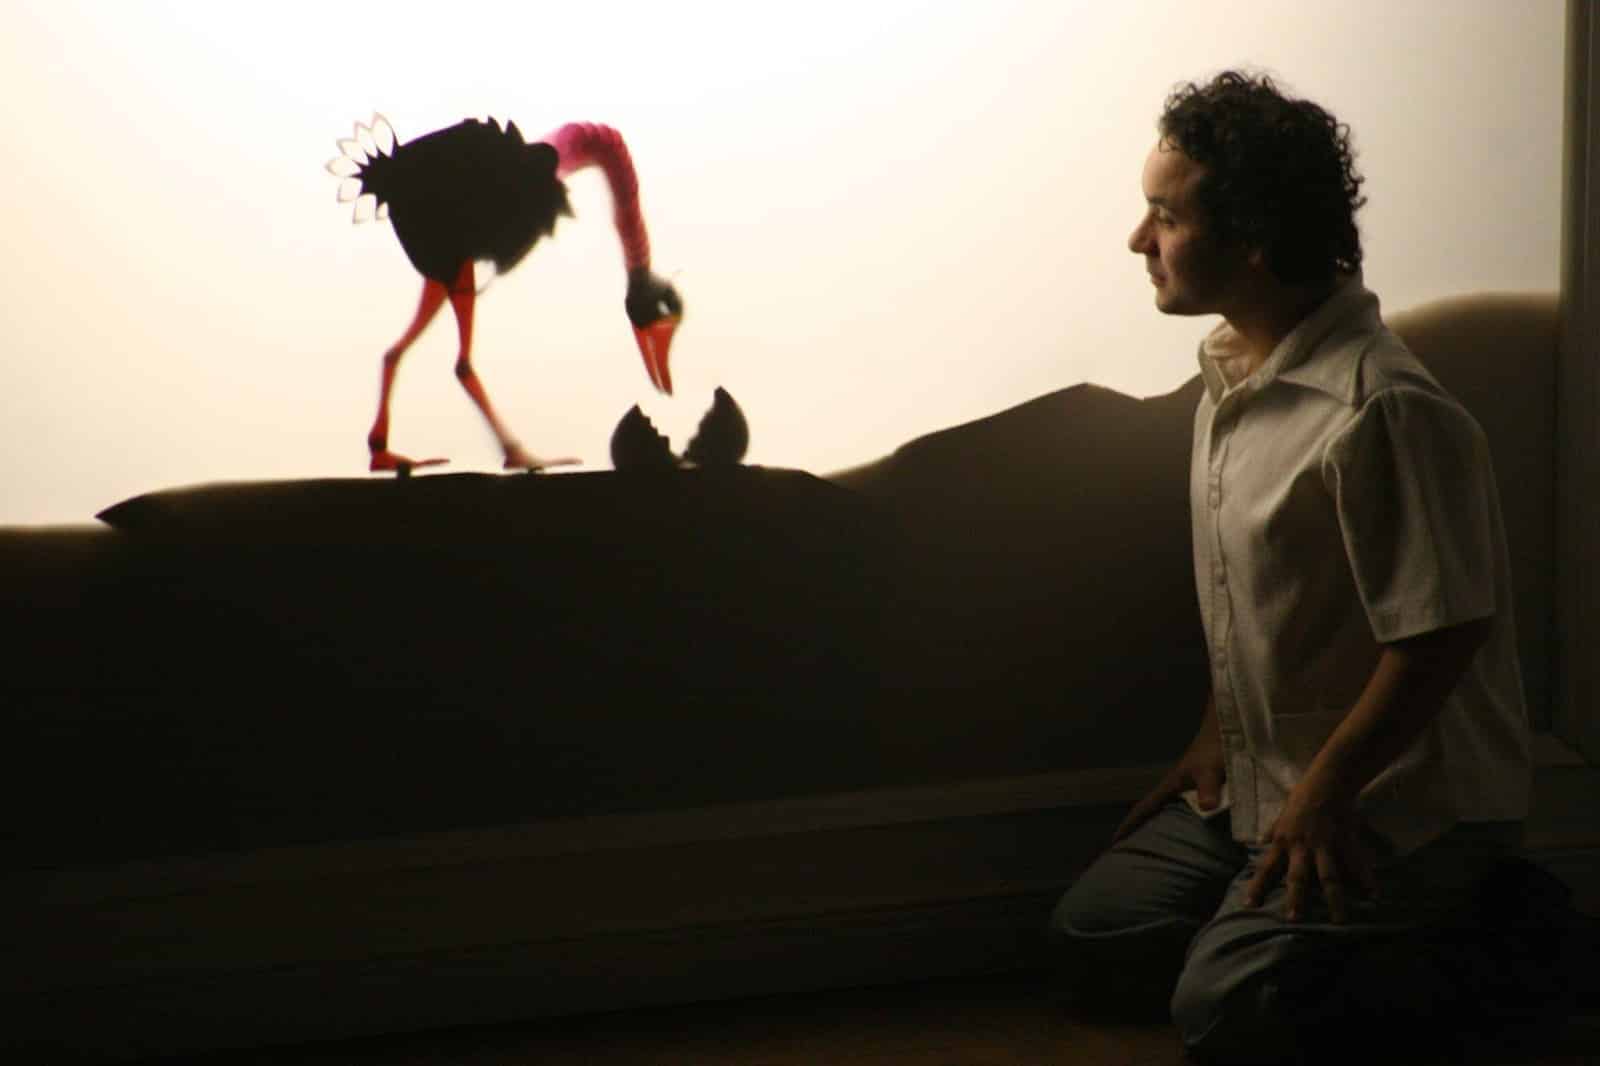 Teatro Sérgio Cardoso recebe teatro de sombras chinesas